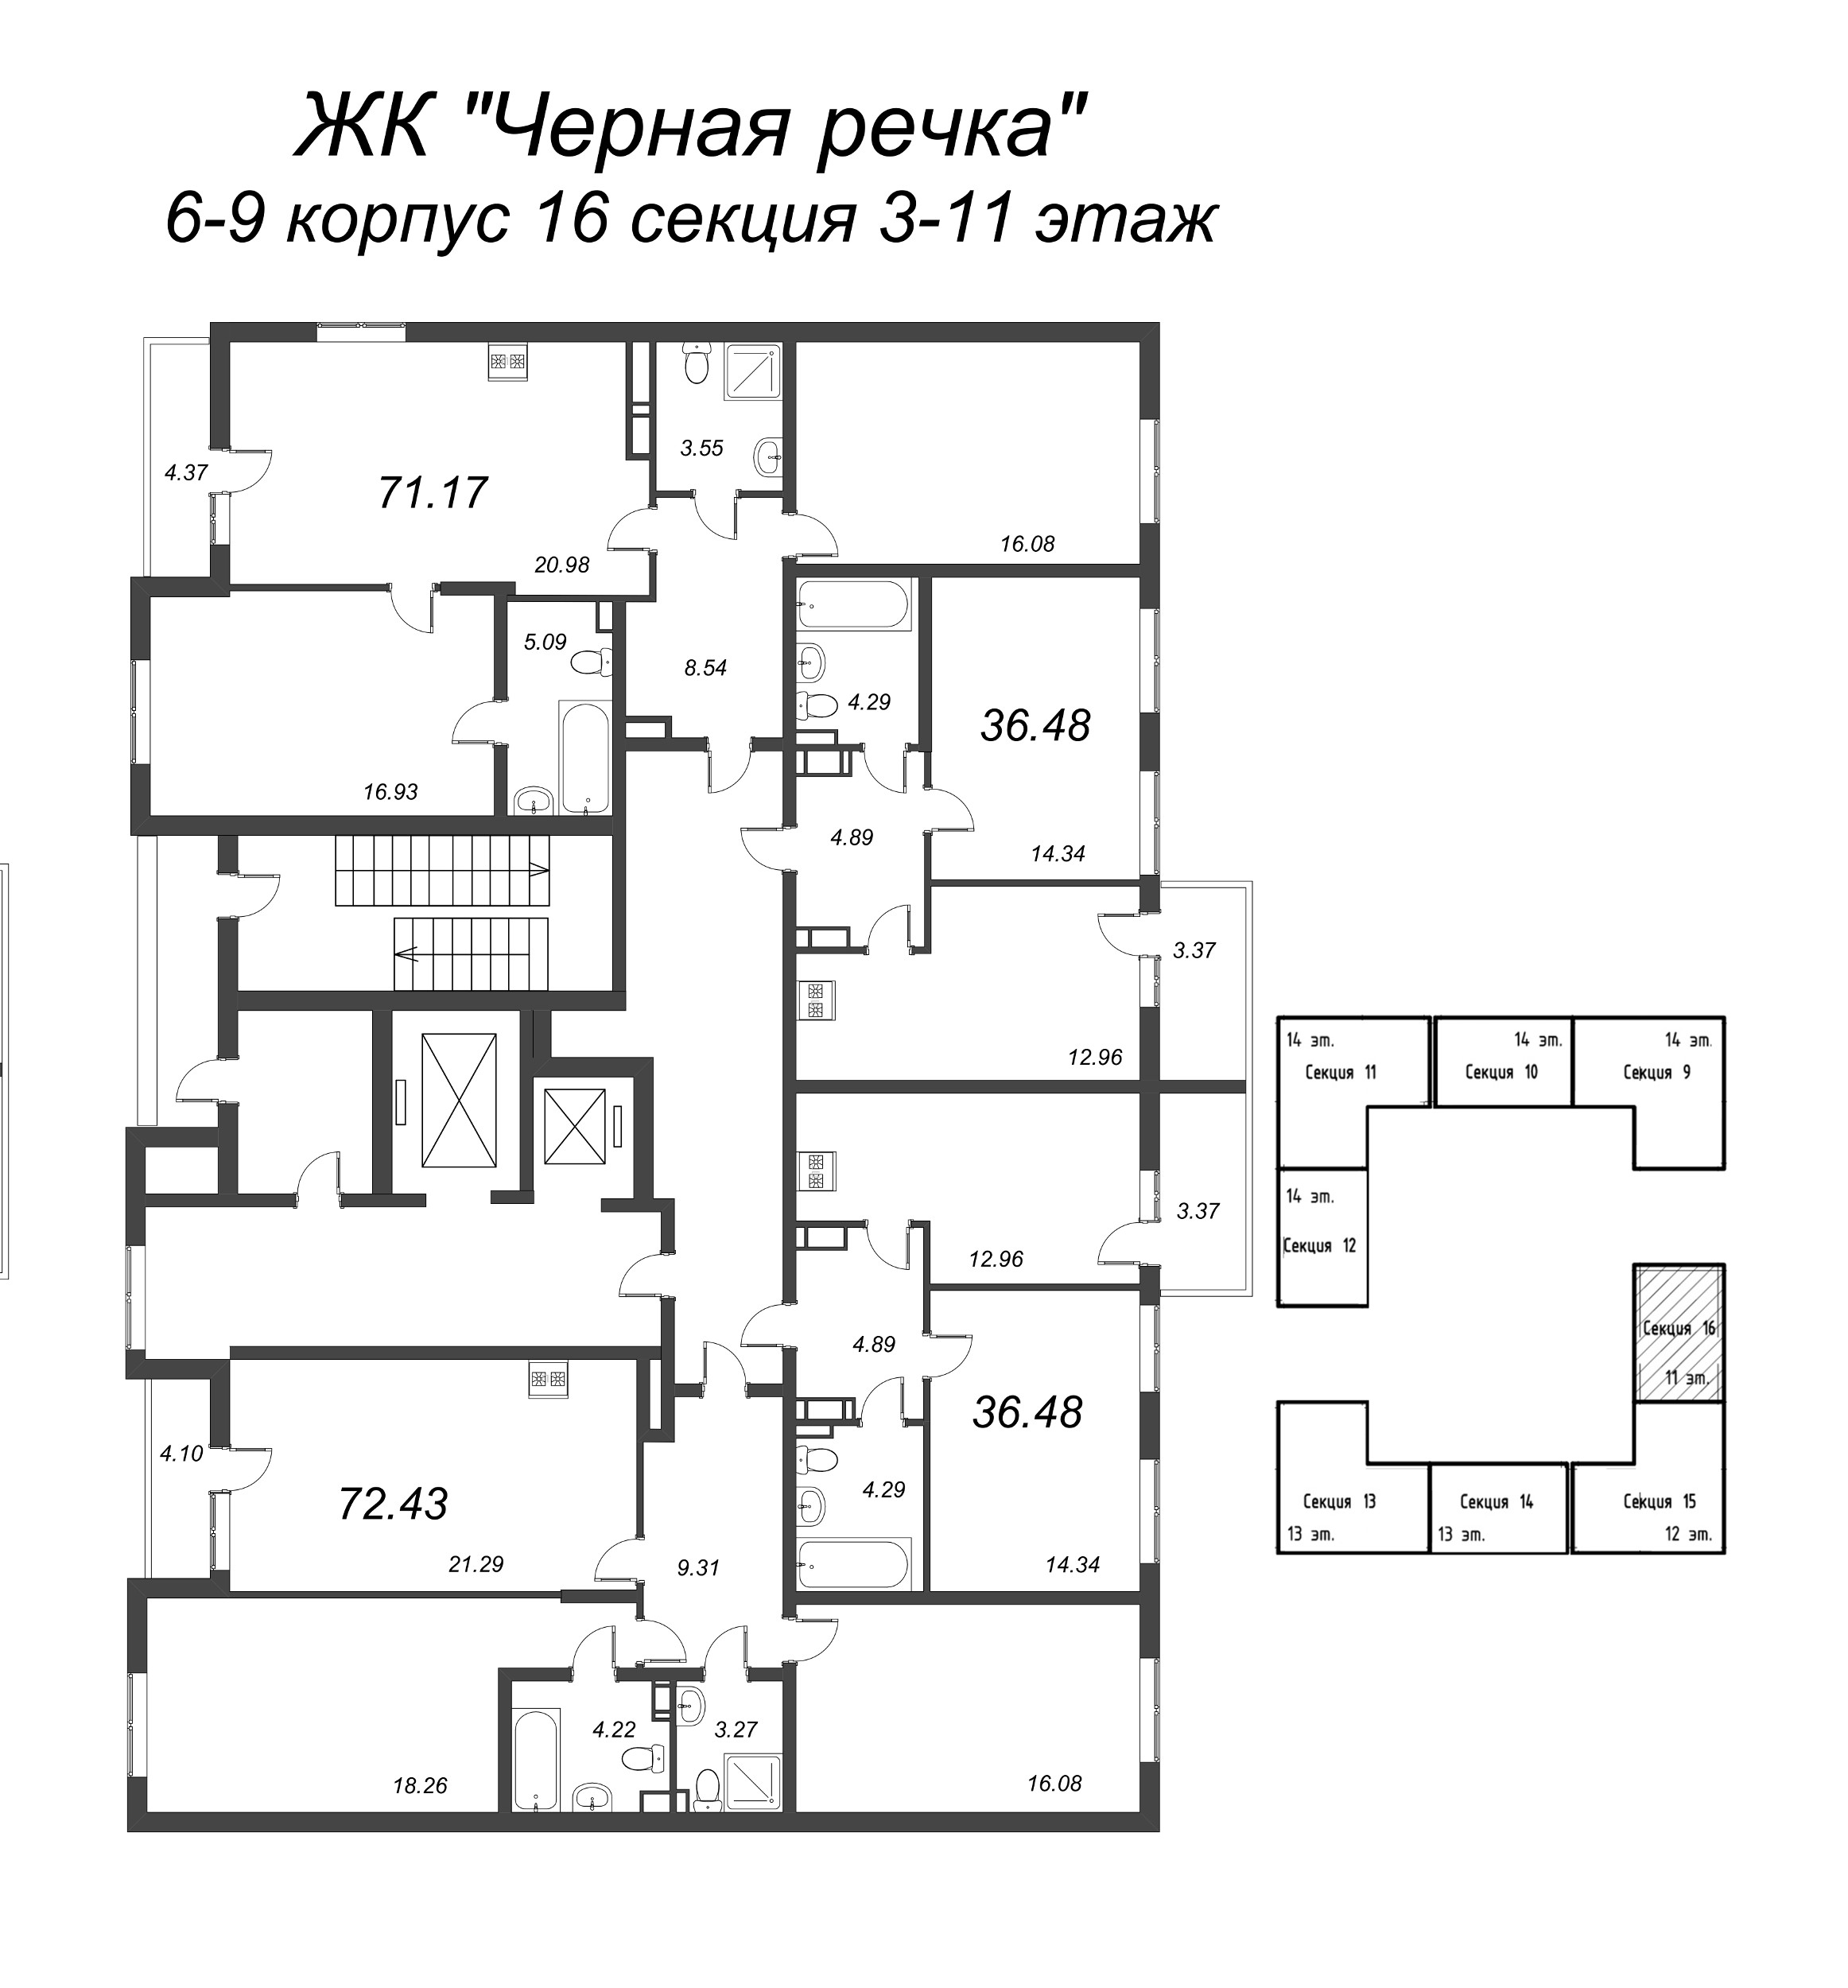 3-комнатная (Евро) квартира, 72.43 м² - планировка этажа